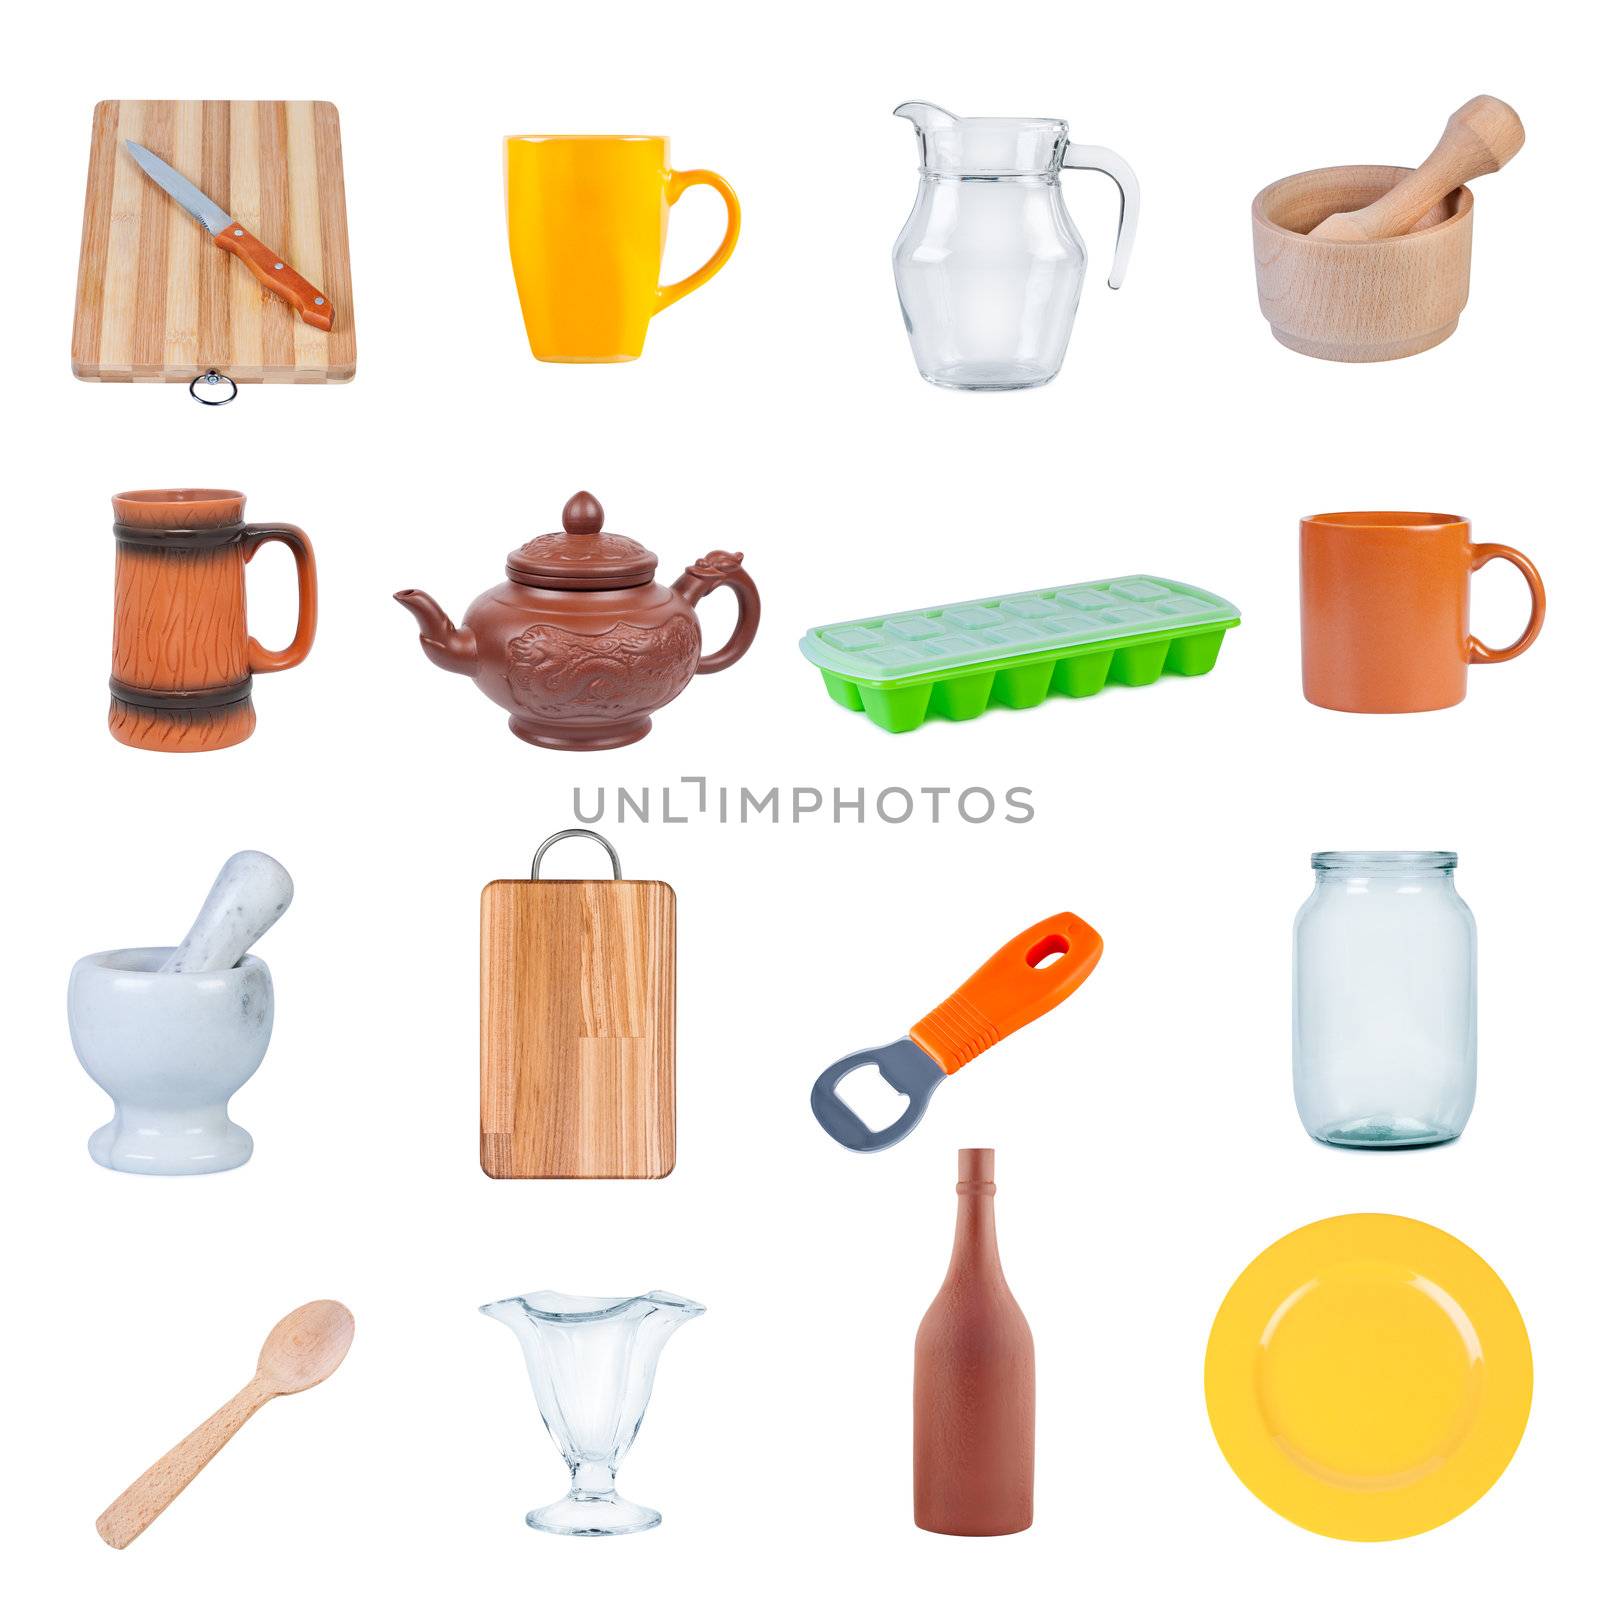 Kitchen utensils and tableware.